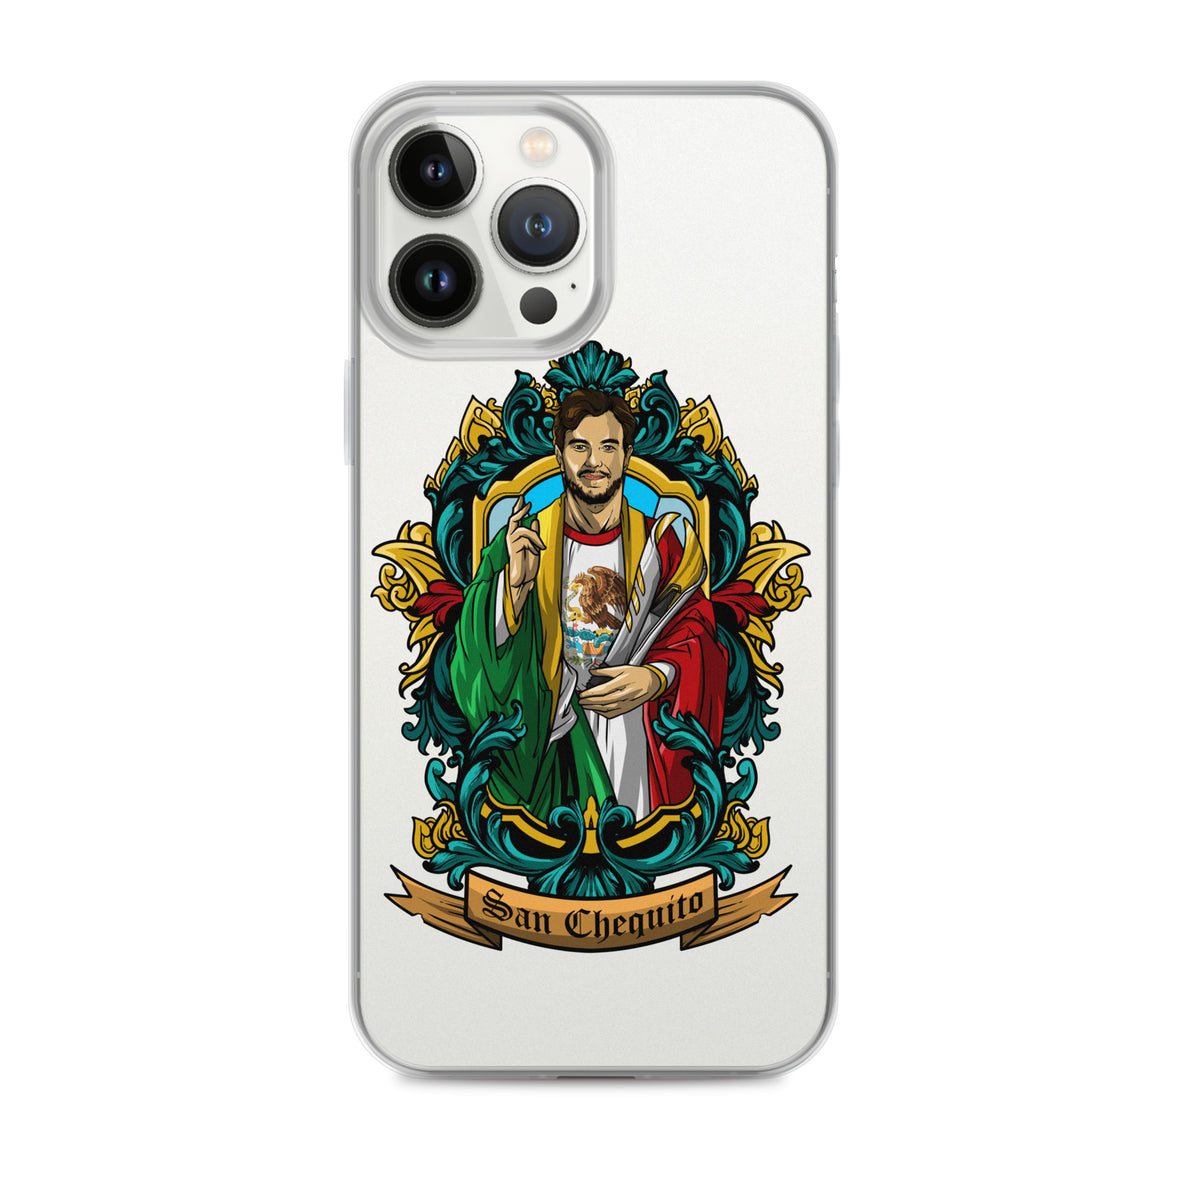 Case para iPhone - San Chequito Deluxe